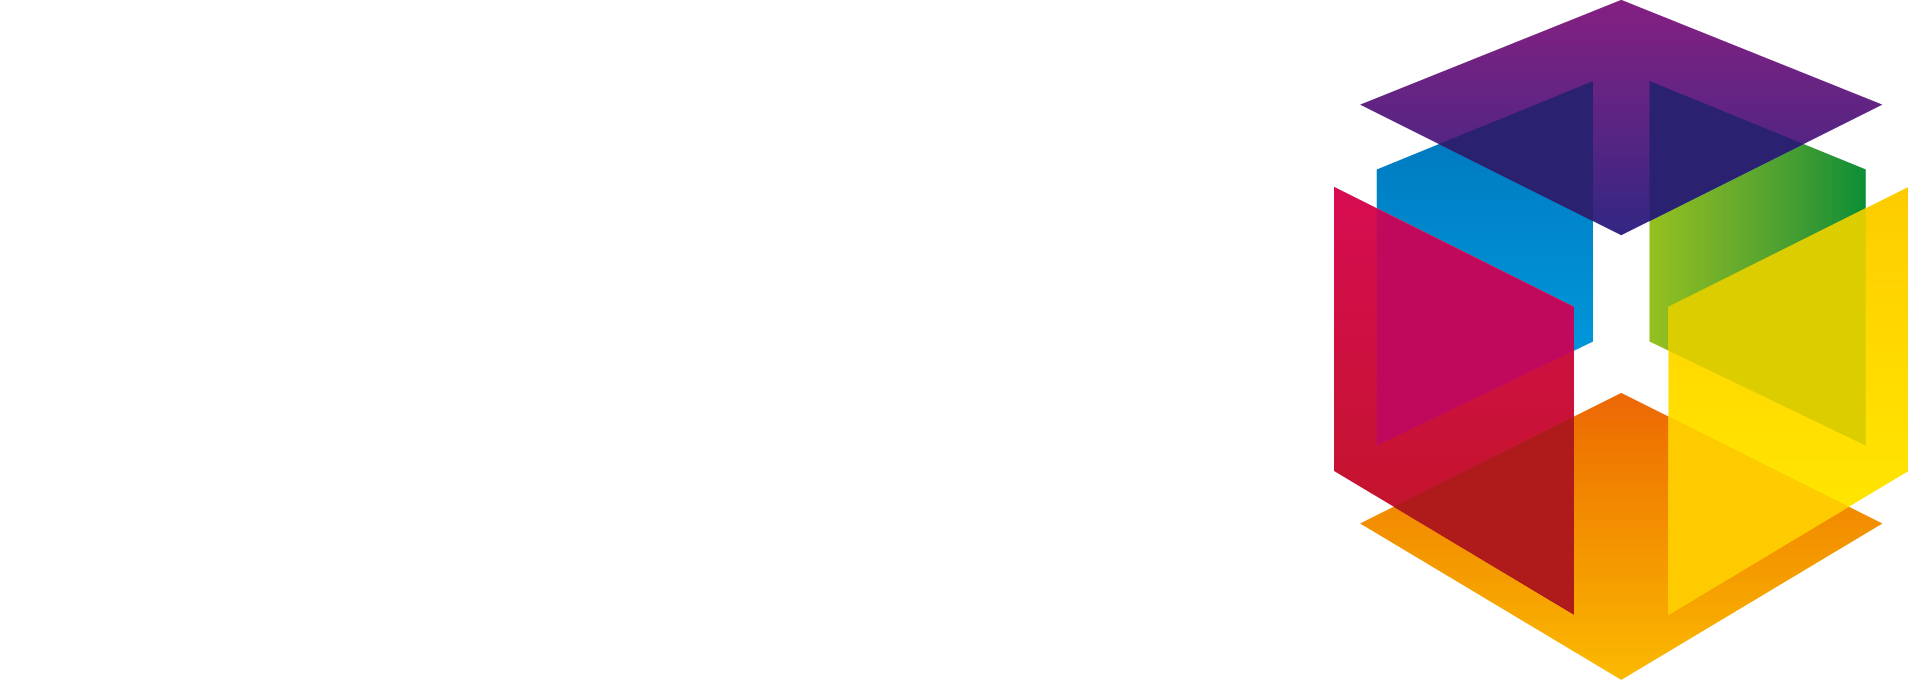 NCE logo